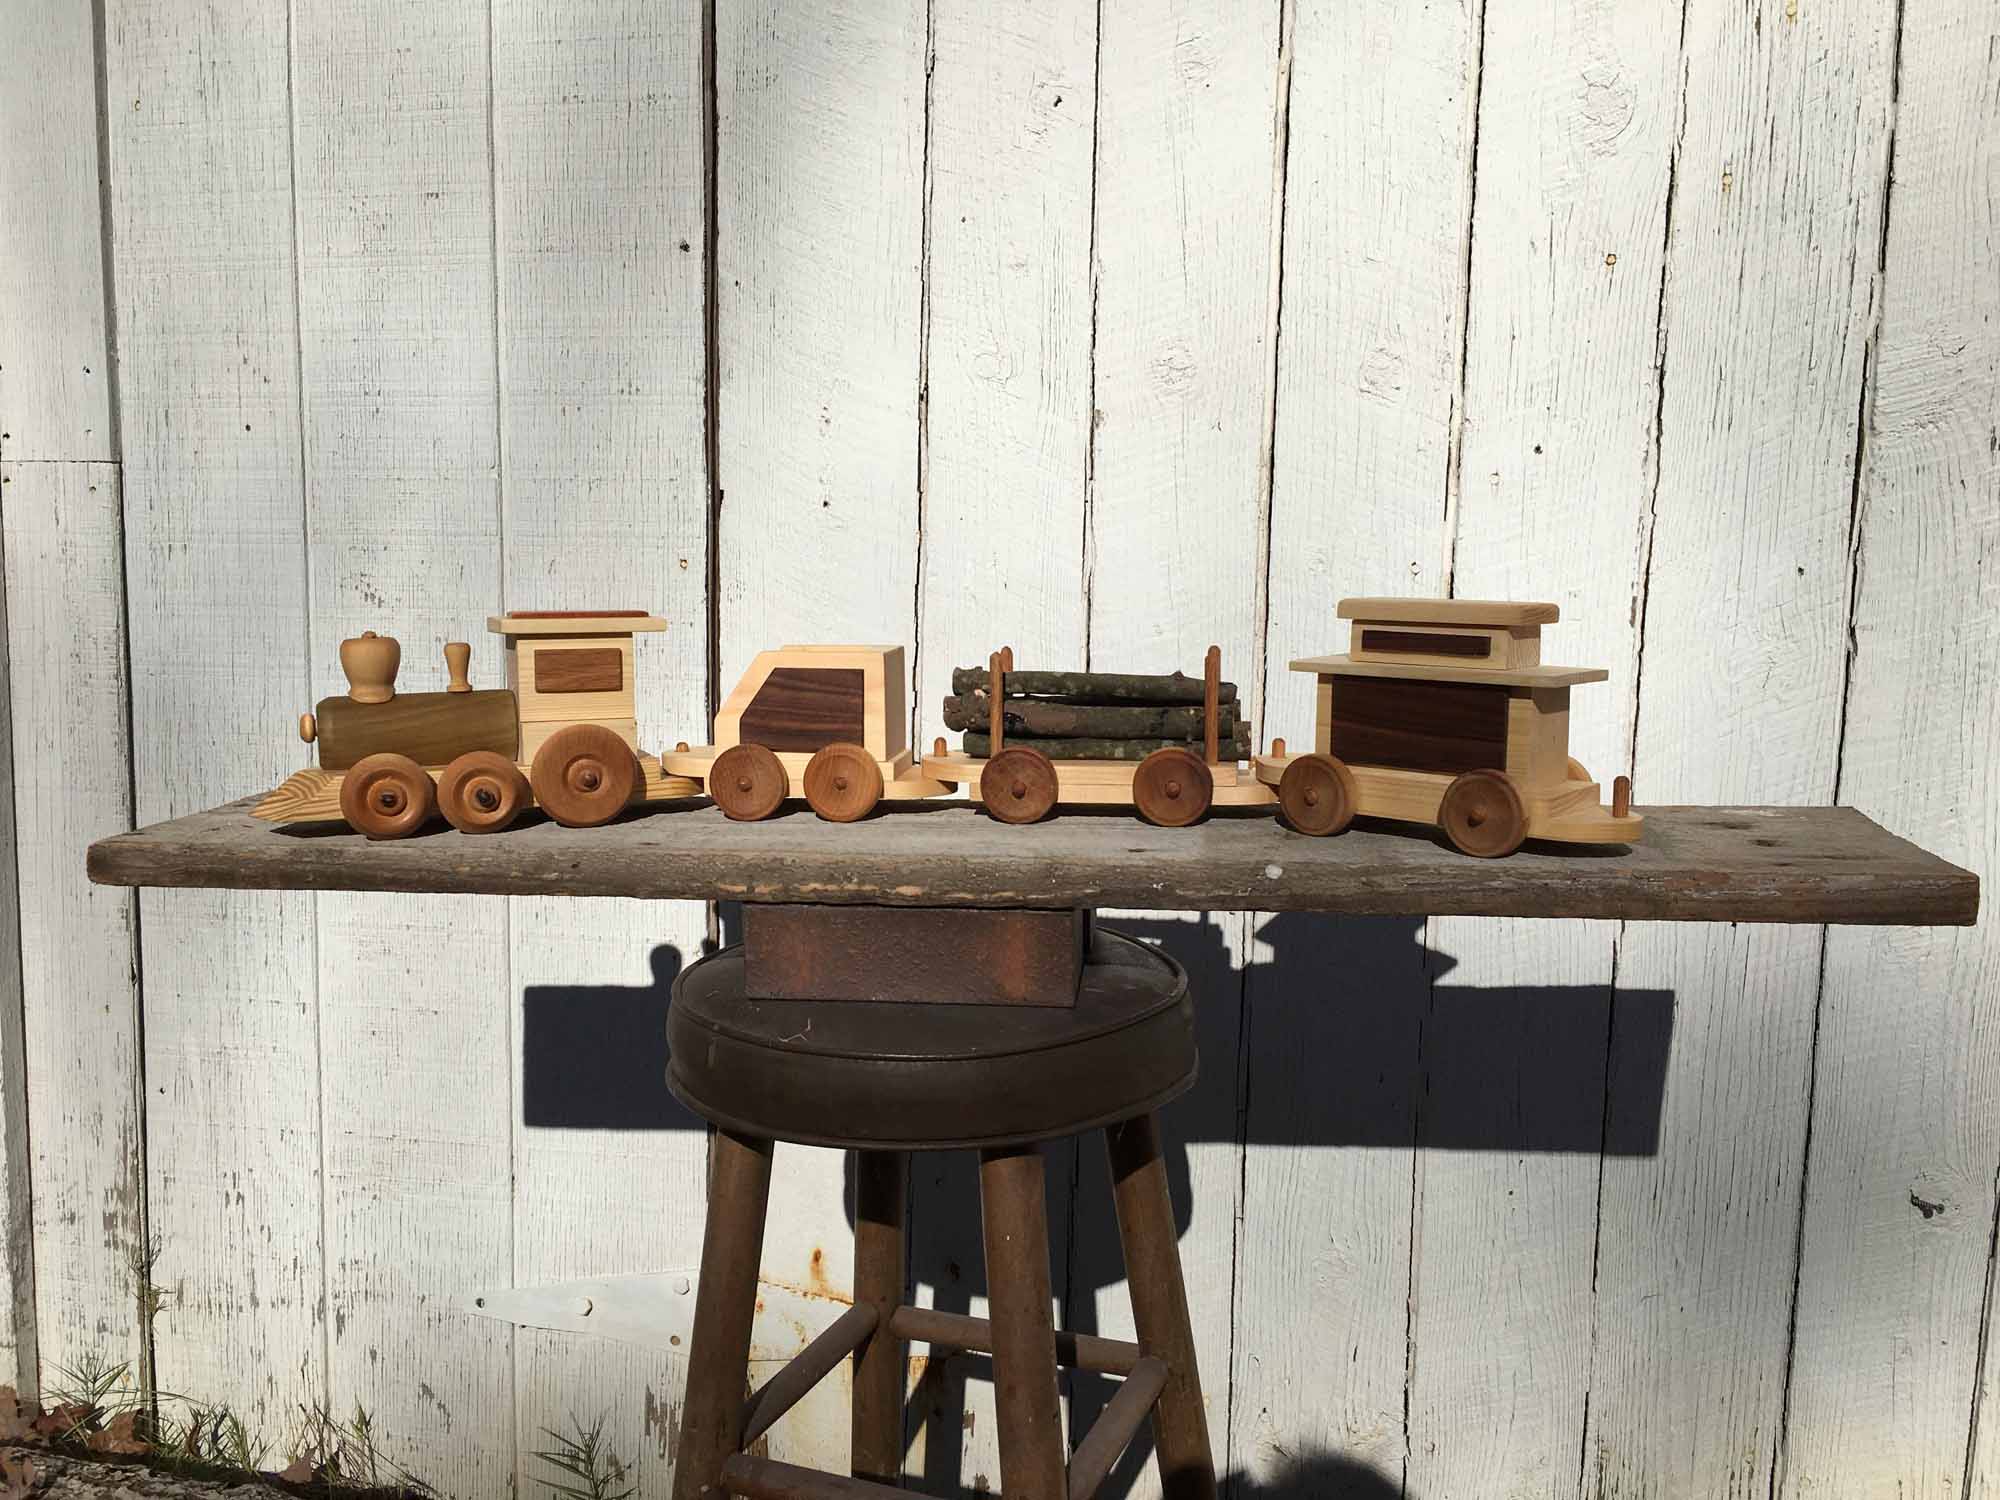 Building Memories: A Wooden Train Workshop